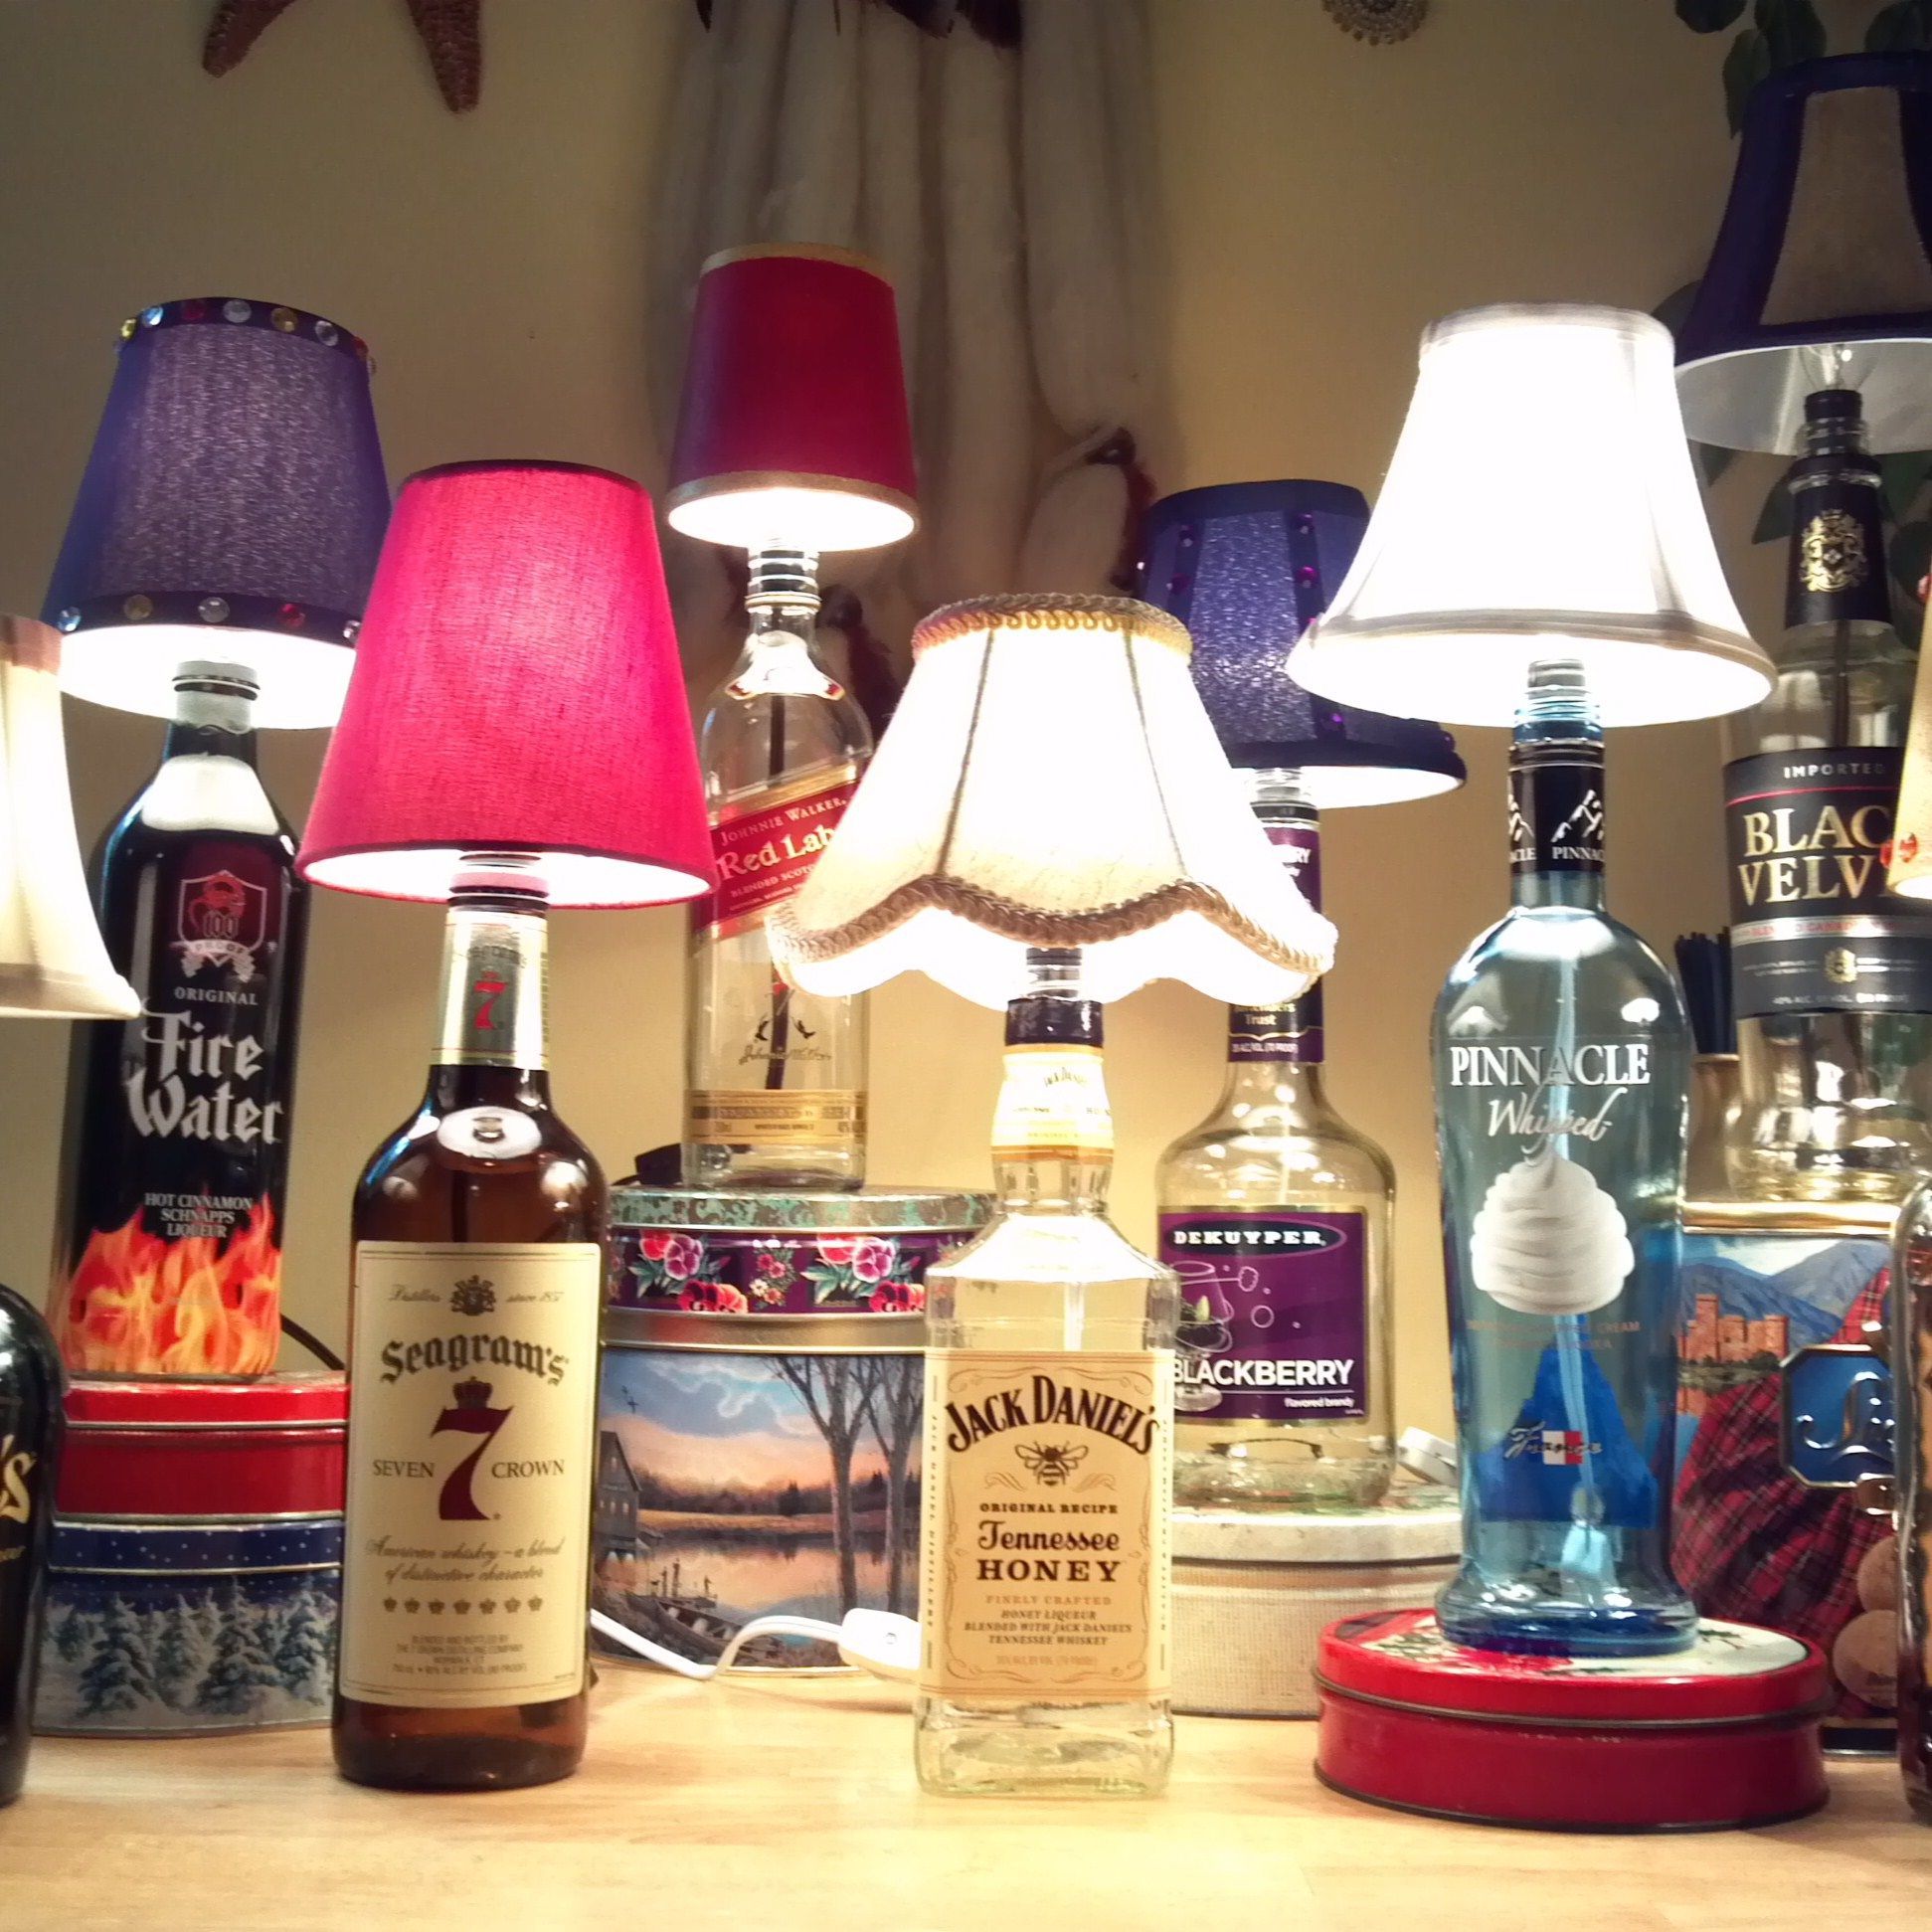 How to Make a Bottle Lamp -   17 diy projects For Men liquor bottles ideas